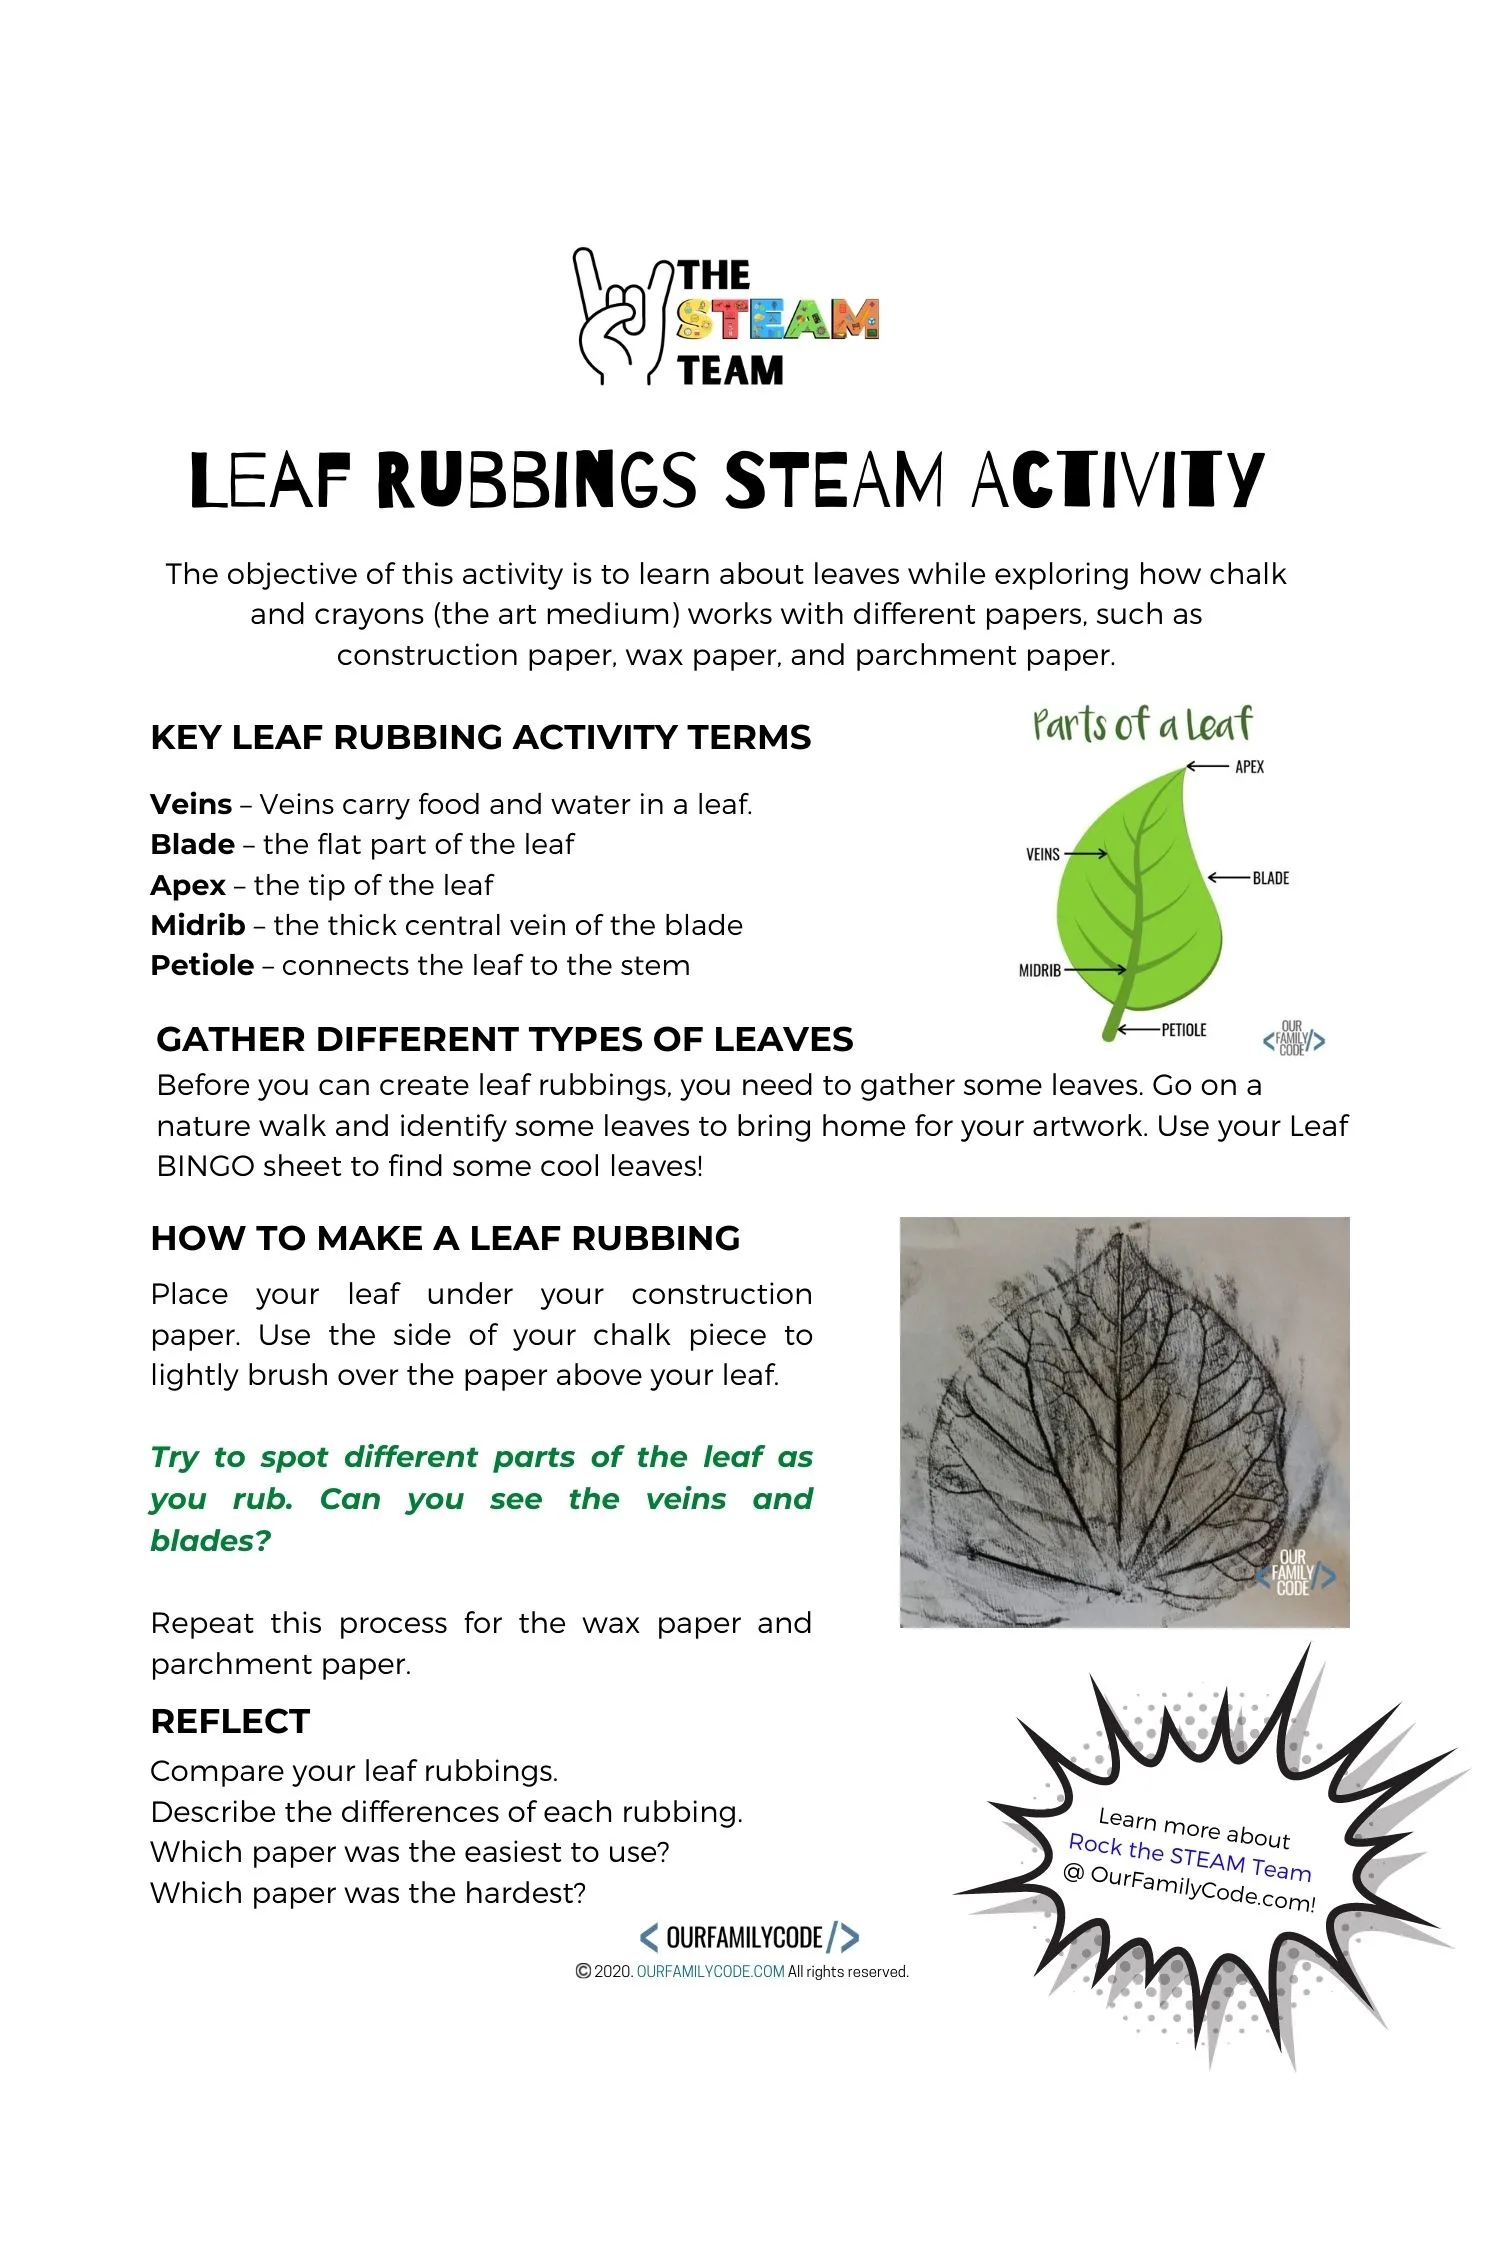 Rock-the-STEAM-1-Leaf-Rubbings